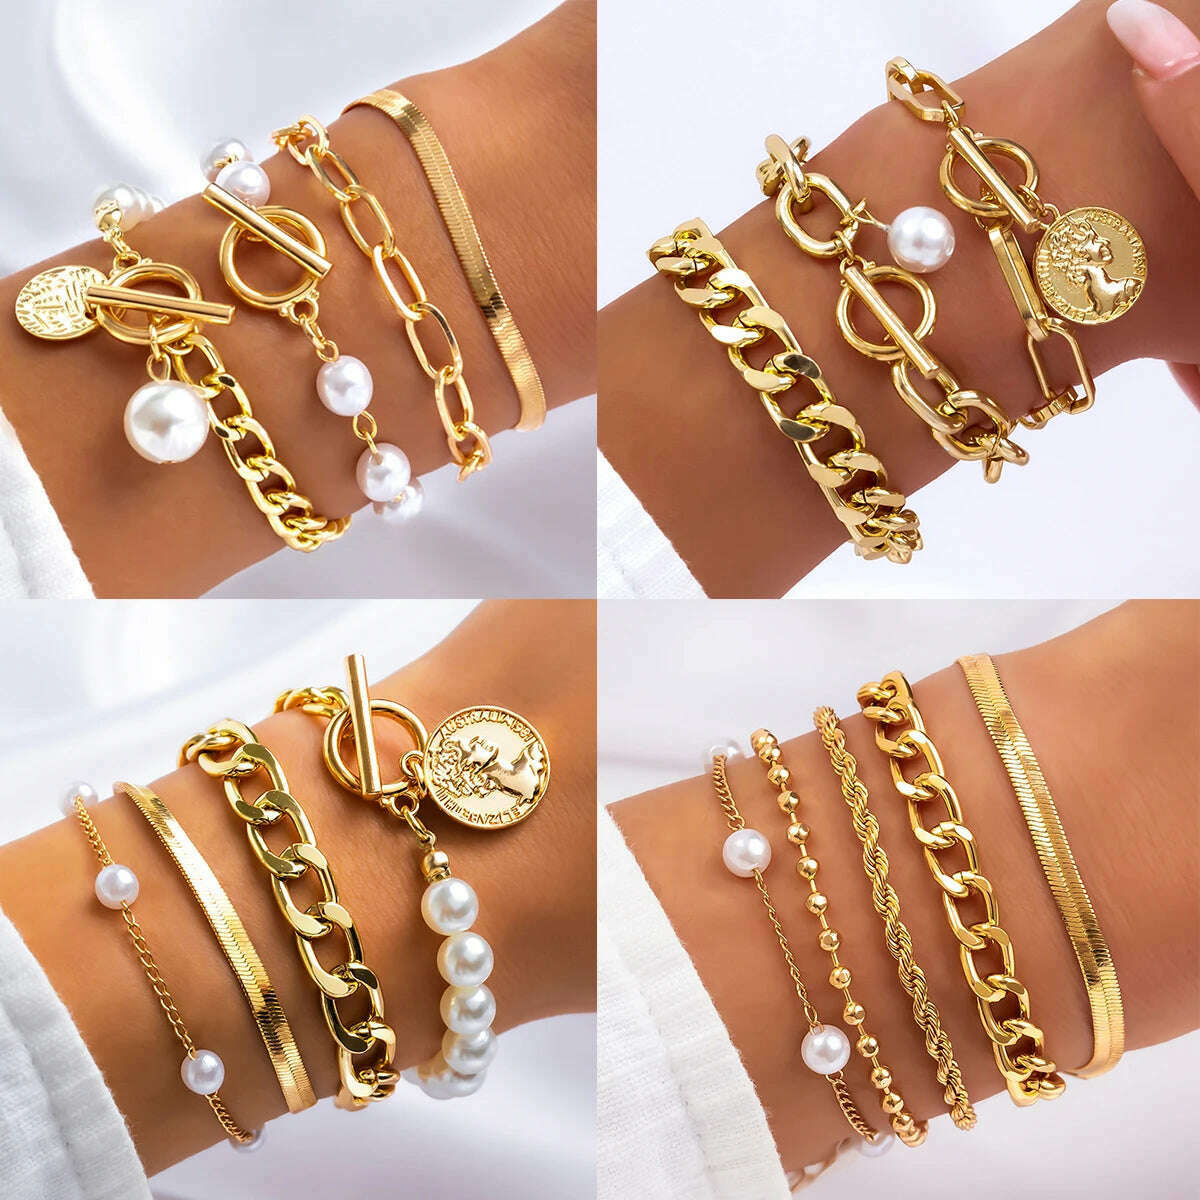 KIMLUD, Ingemark Boho Imitation Pearl Chain Coin Pendant Bracelets Set for Women on Hand Vintage Snake Link Bangles Couple Wrist Jewelry, KIMLUD Womens Clothes